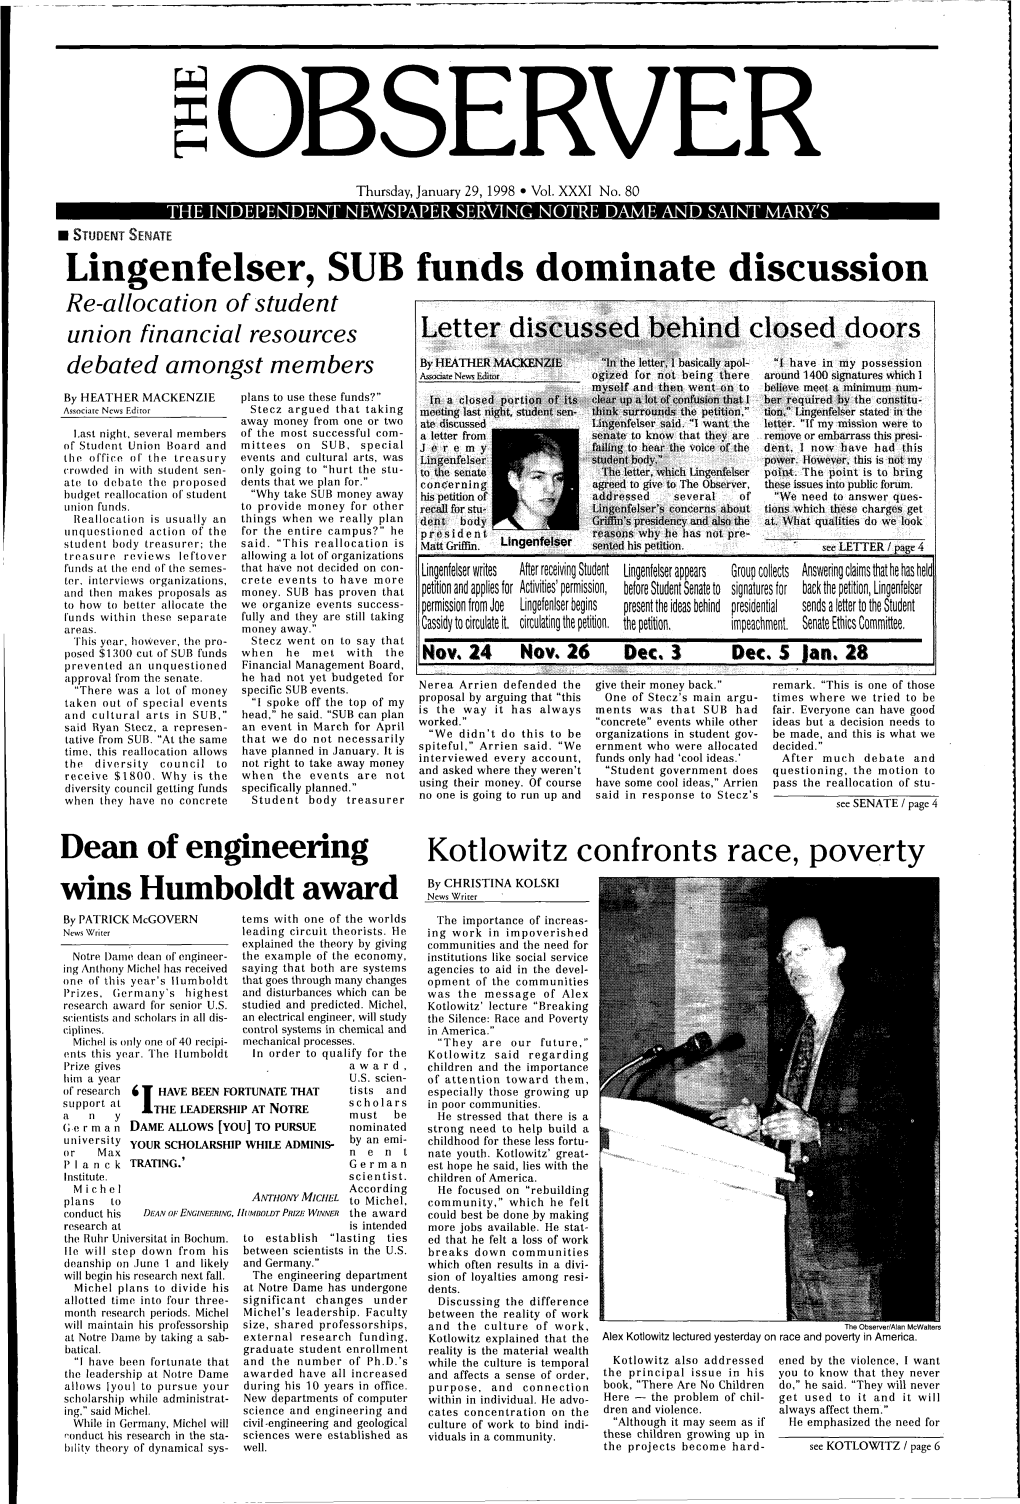 Lingenfelser, SUB Funds Dominate Discussion